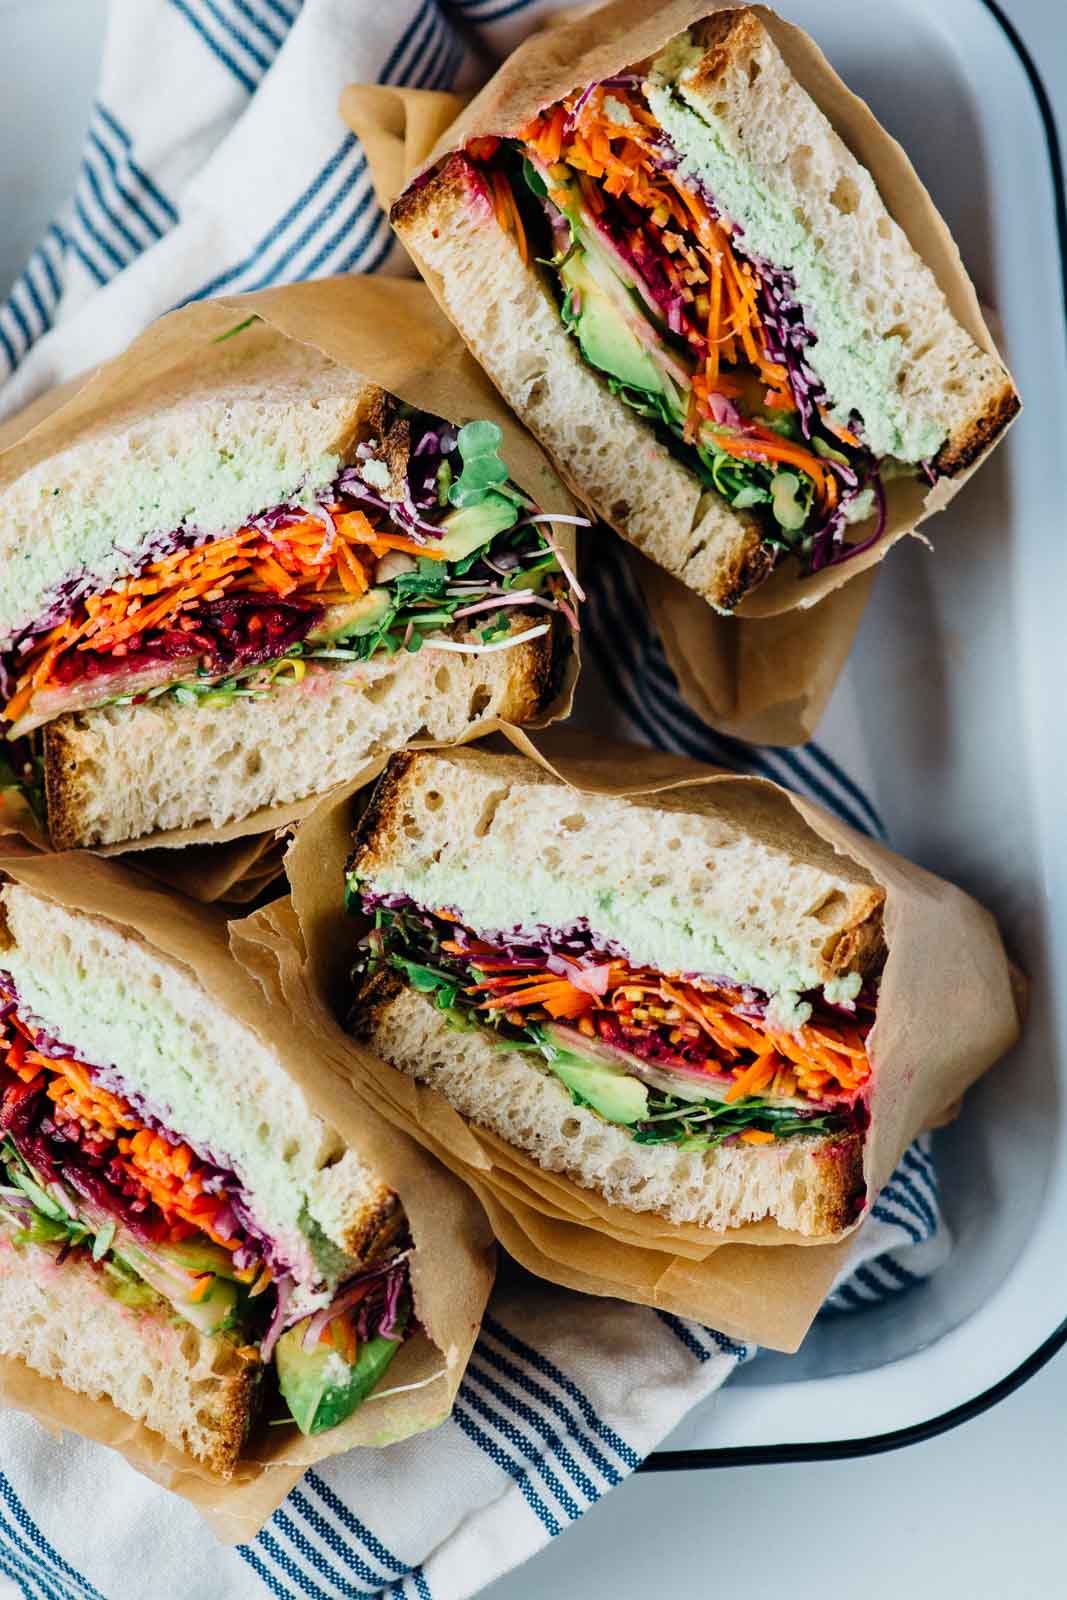 Stylish Sandwich Presentation Ideas That Will Amaze Anyone